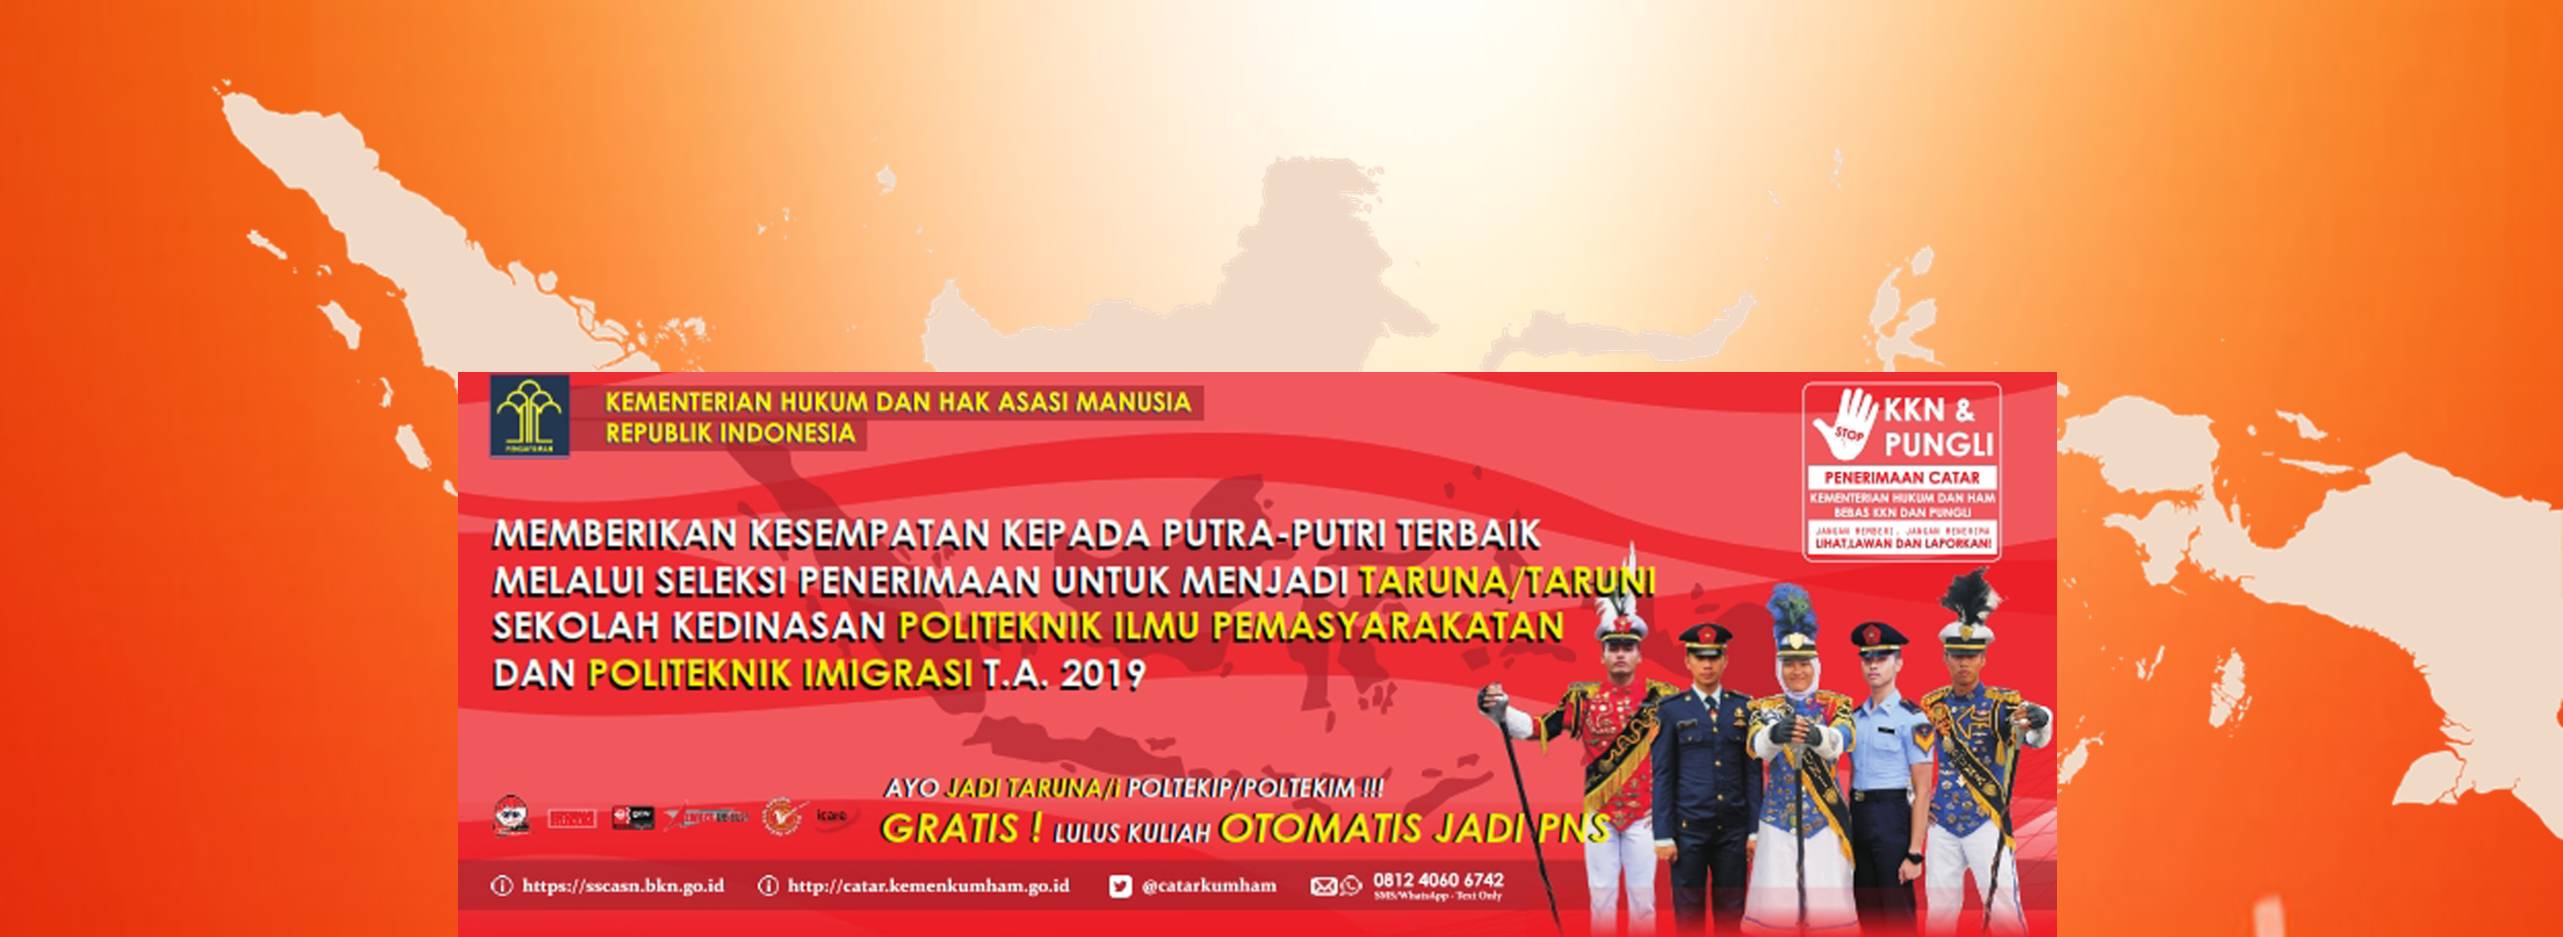 Selamat Datang di Kantor Wilayah Kementerian Hukum dan Hak Asasi Manusia Daerah Istimewa Yogyakarta